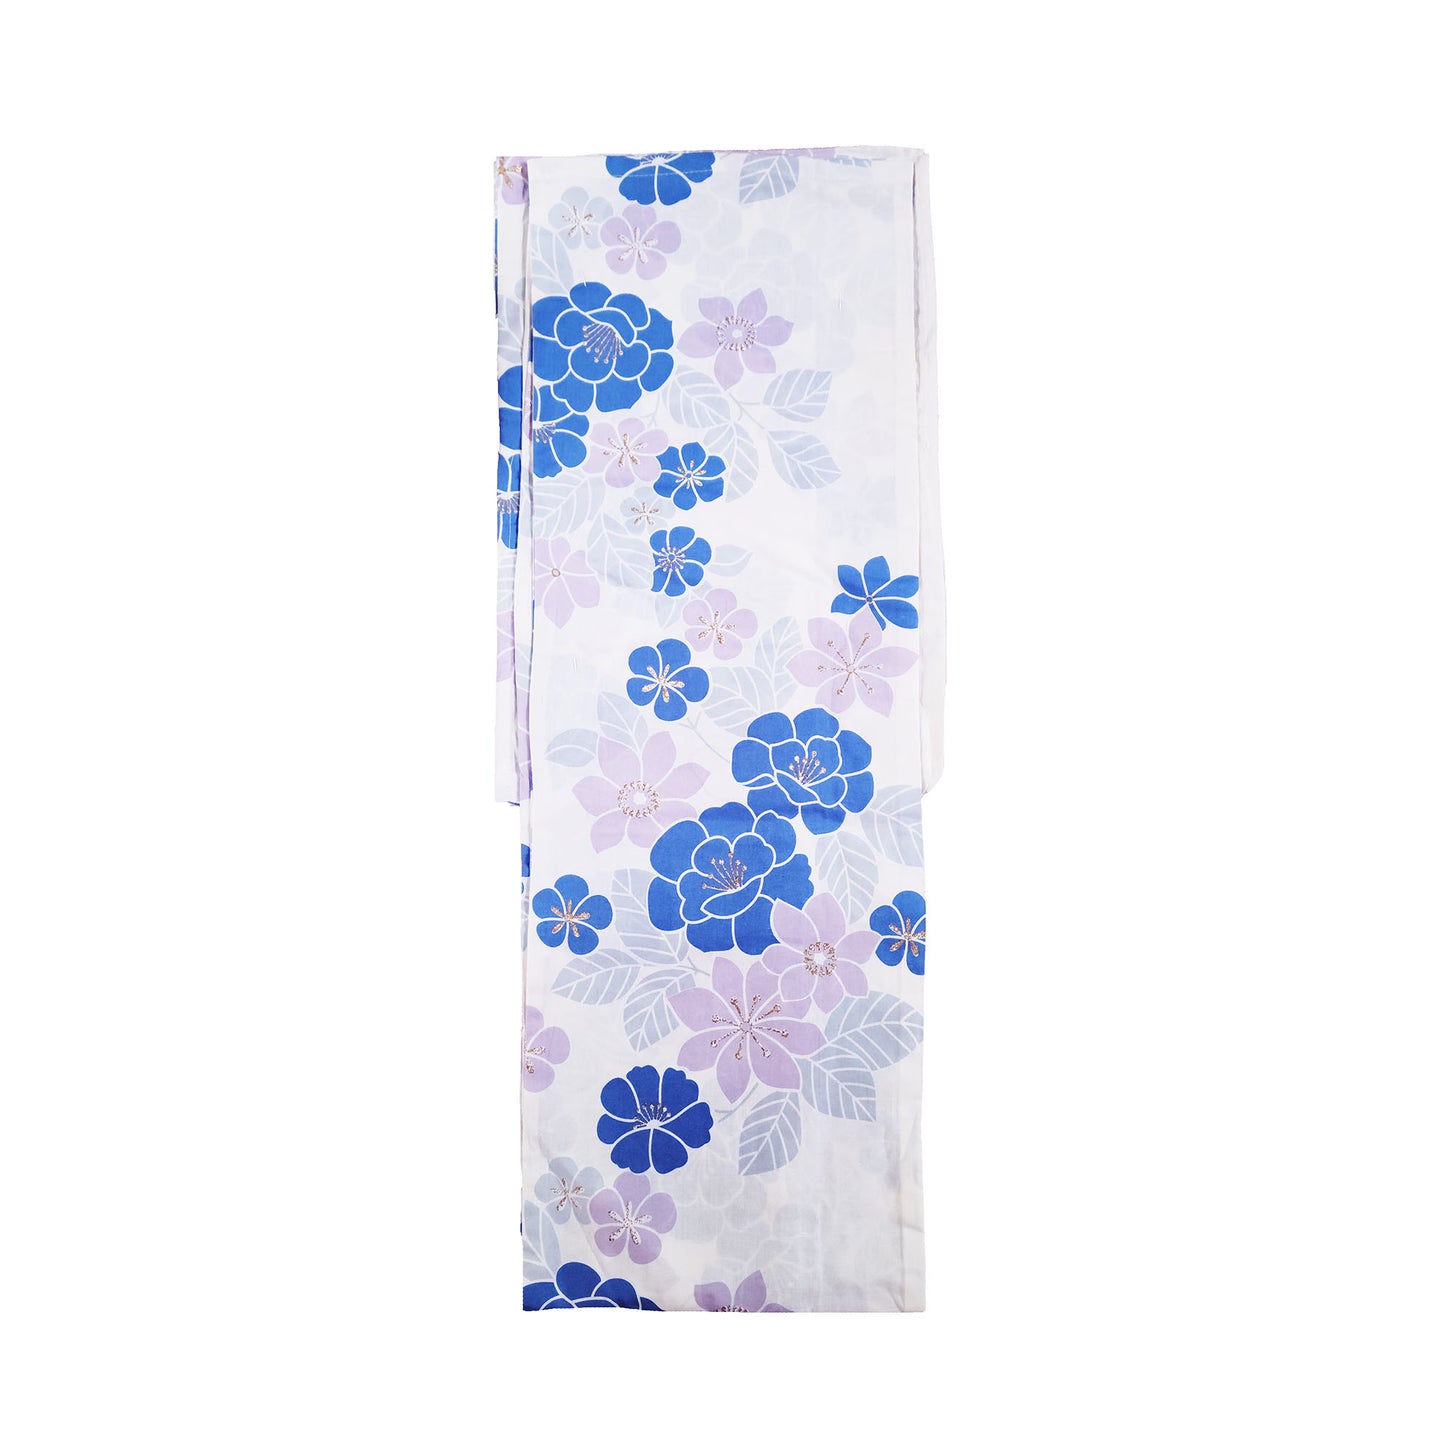 Japanese Yukata Kimono - Blue and Purple Flowers in White